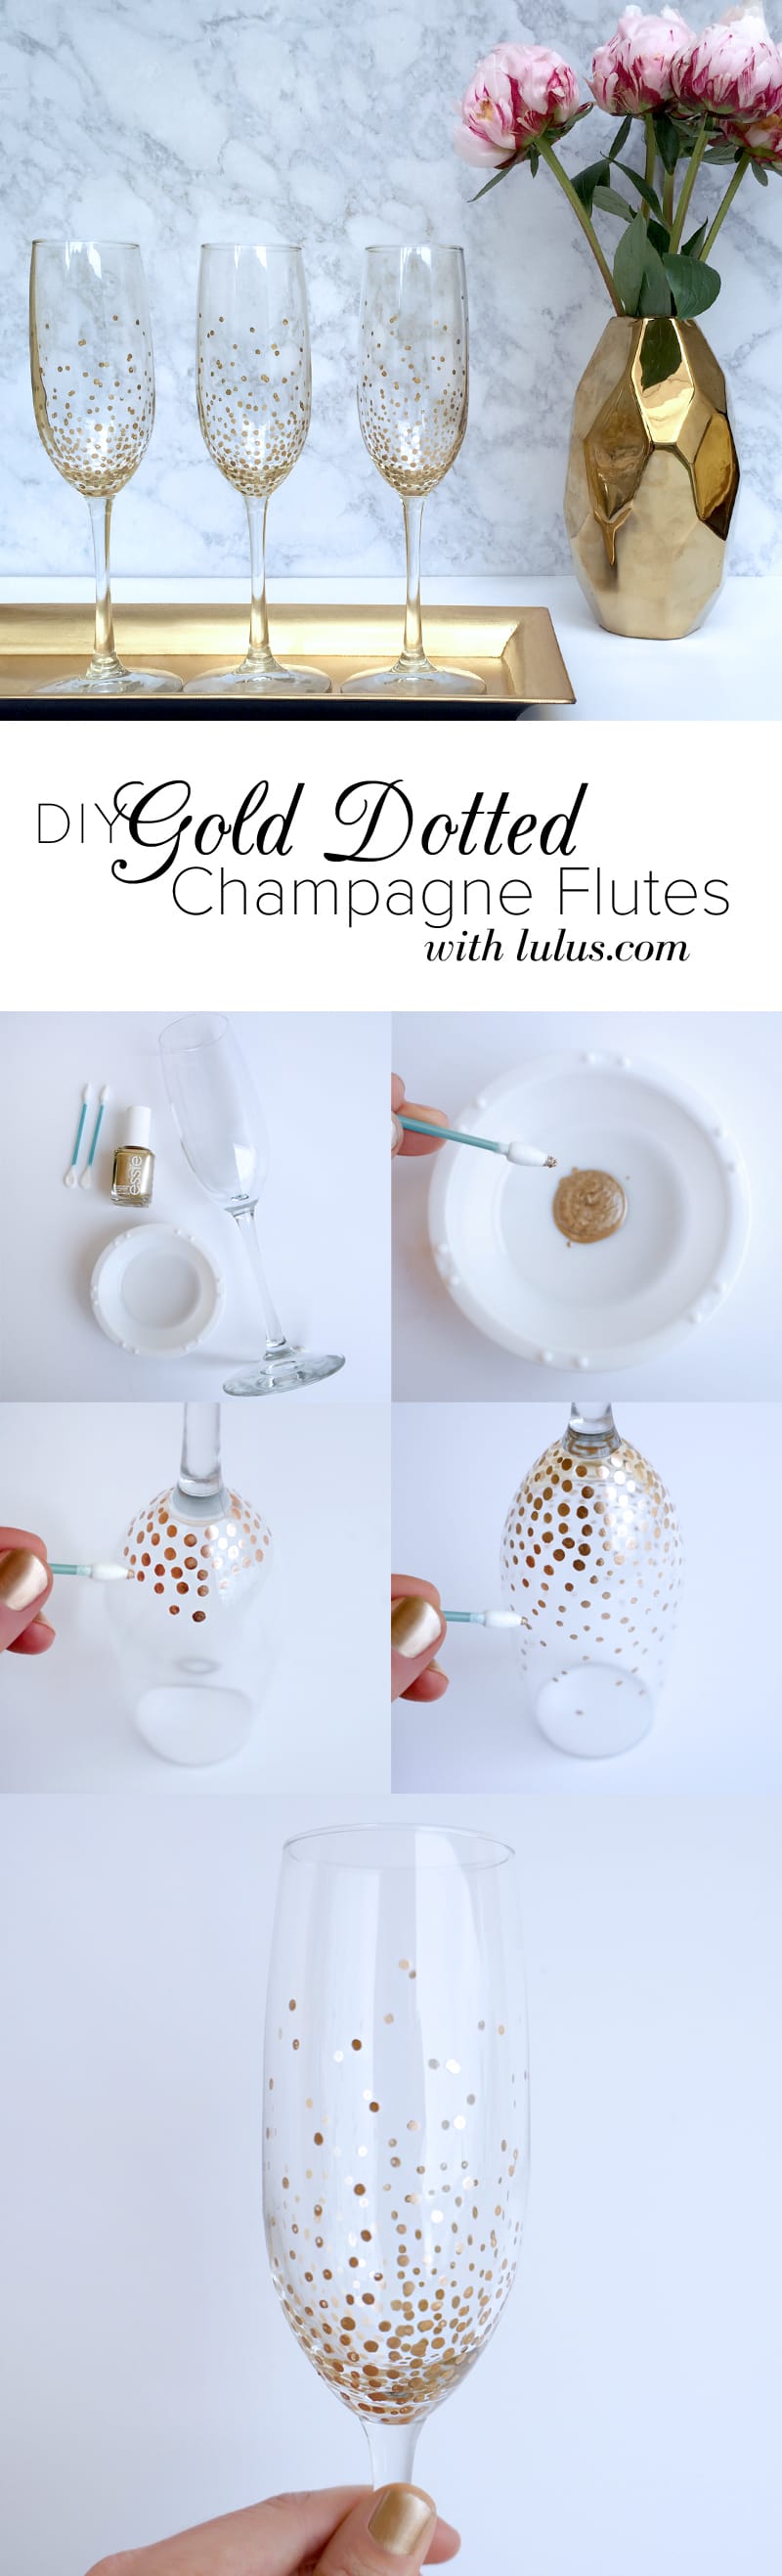 DIY Gold Dot Champagne Flutes - Lulus.com Fashion Blog